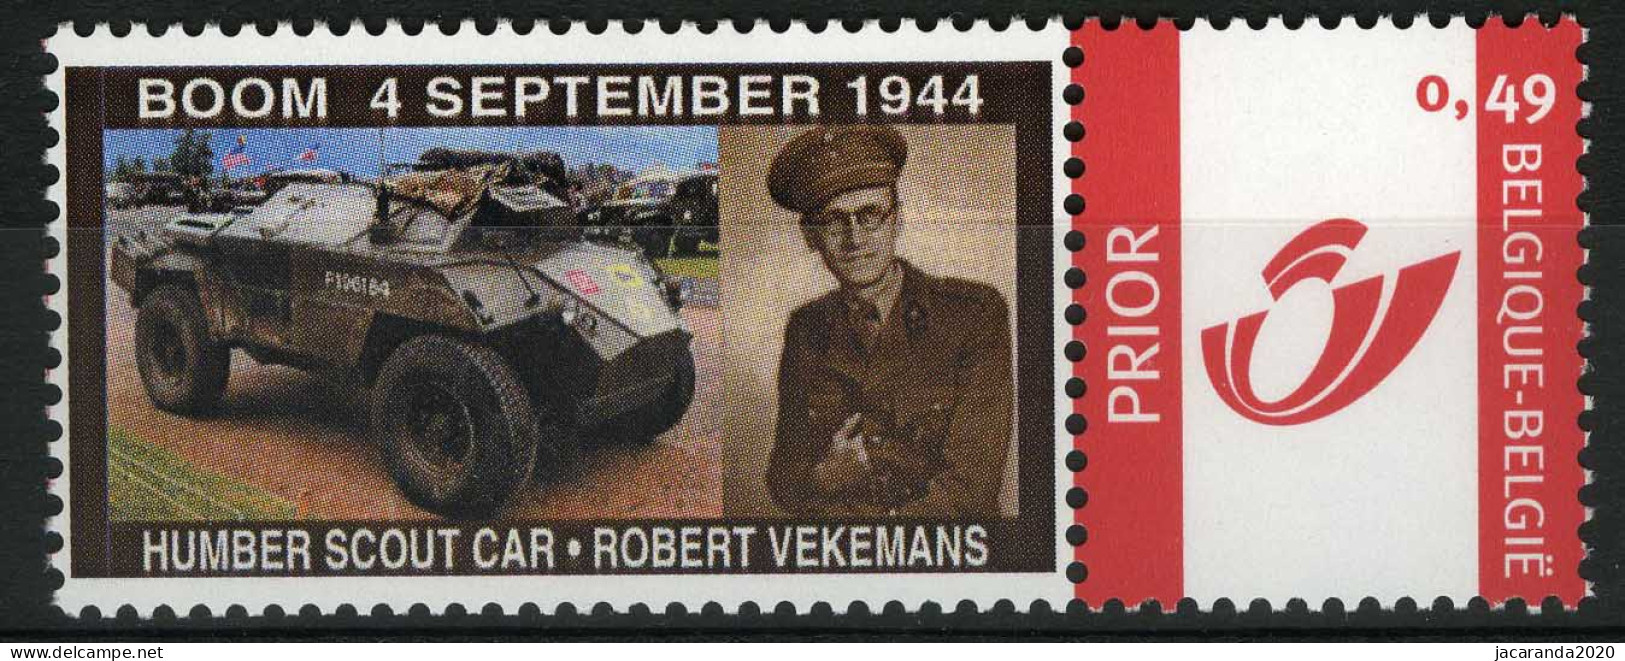 België 3183 - Duostamp - Humber Scout Car - Vekemans - Oorlog - Tank - Boom 4 September 1944 - Ungebraucht